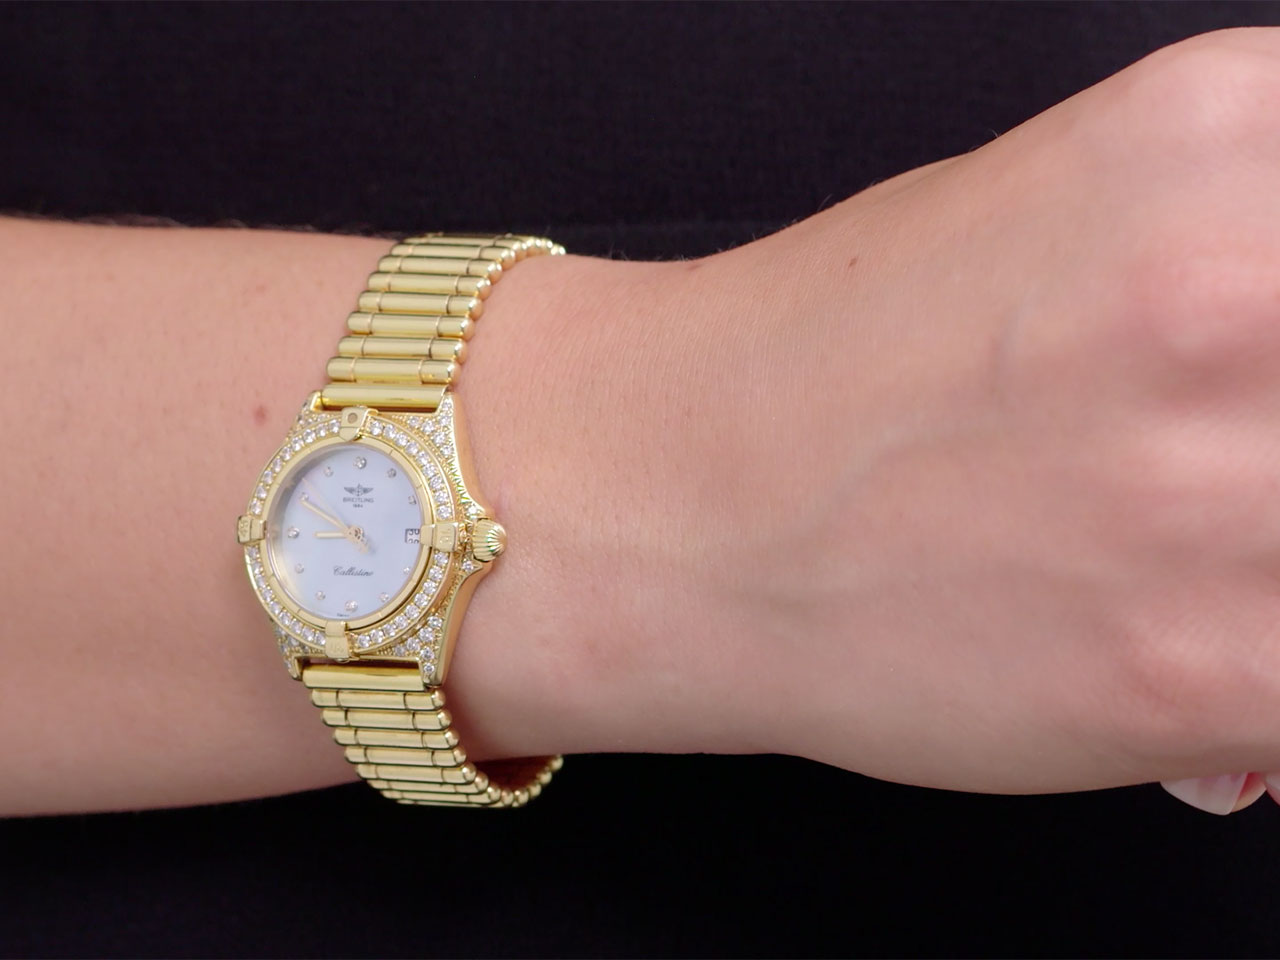 Breitling Diamond 'Callistino' Watch in 18K Gold